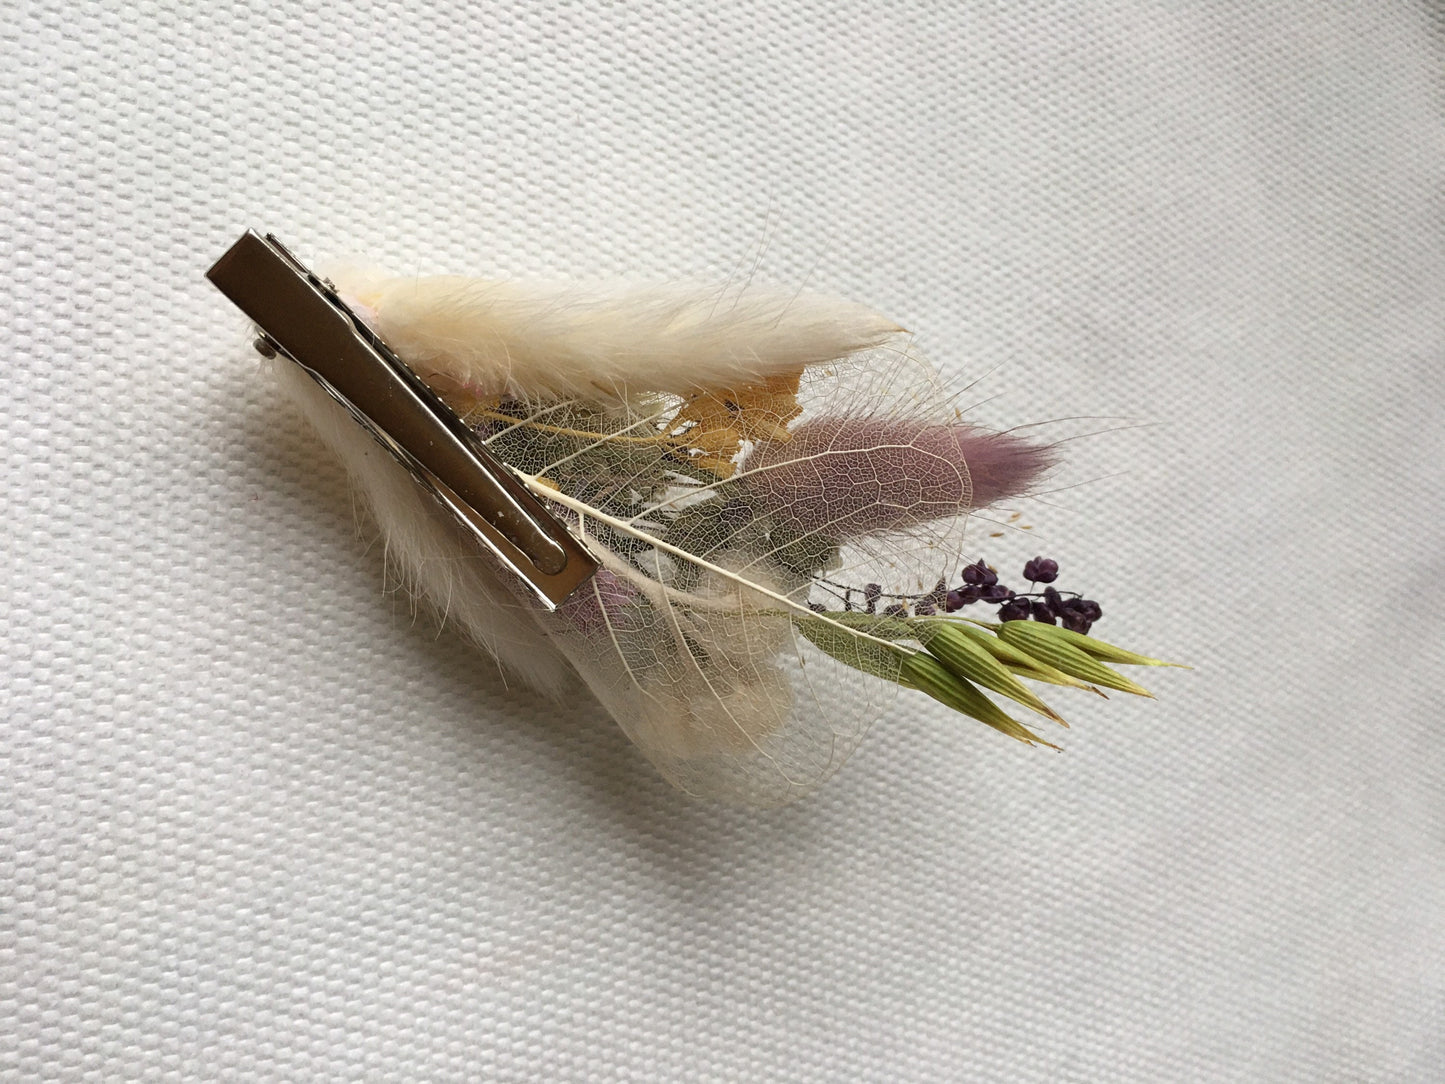 Handmade Flower Hair Clip UK, Pastel Floral Hair Clip, Dried Flower Ivory Hair Piece, Bohemian Bridal Hair Accessories, Unique Design Gift